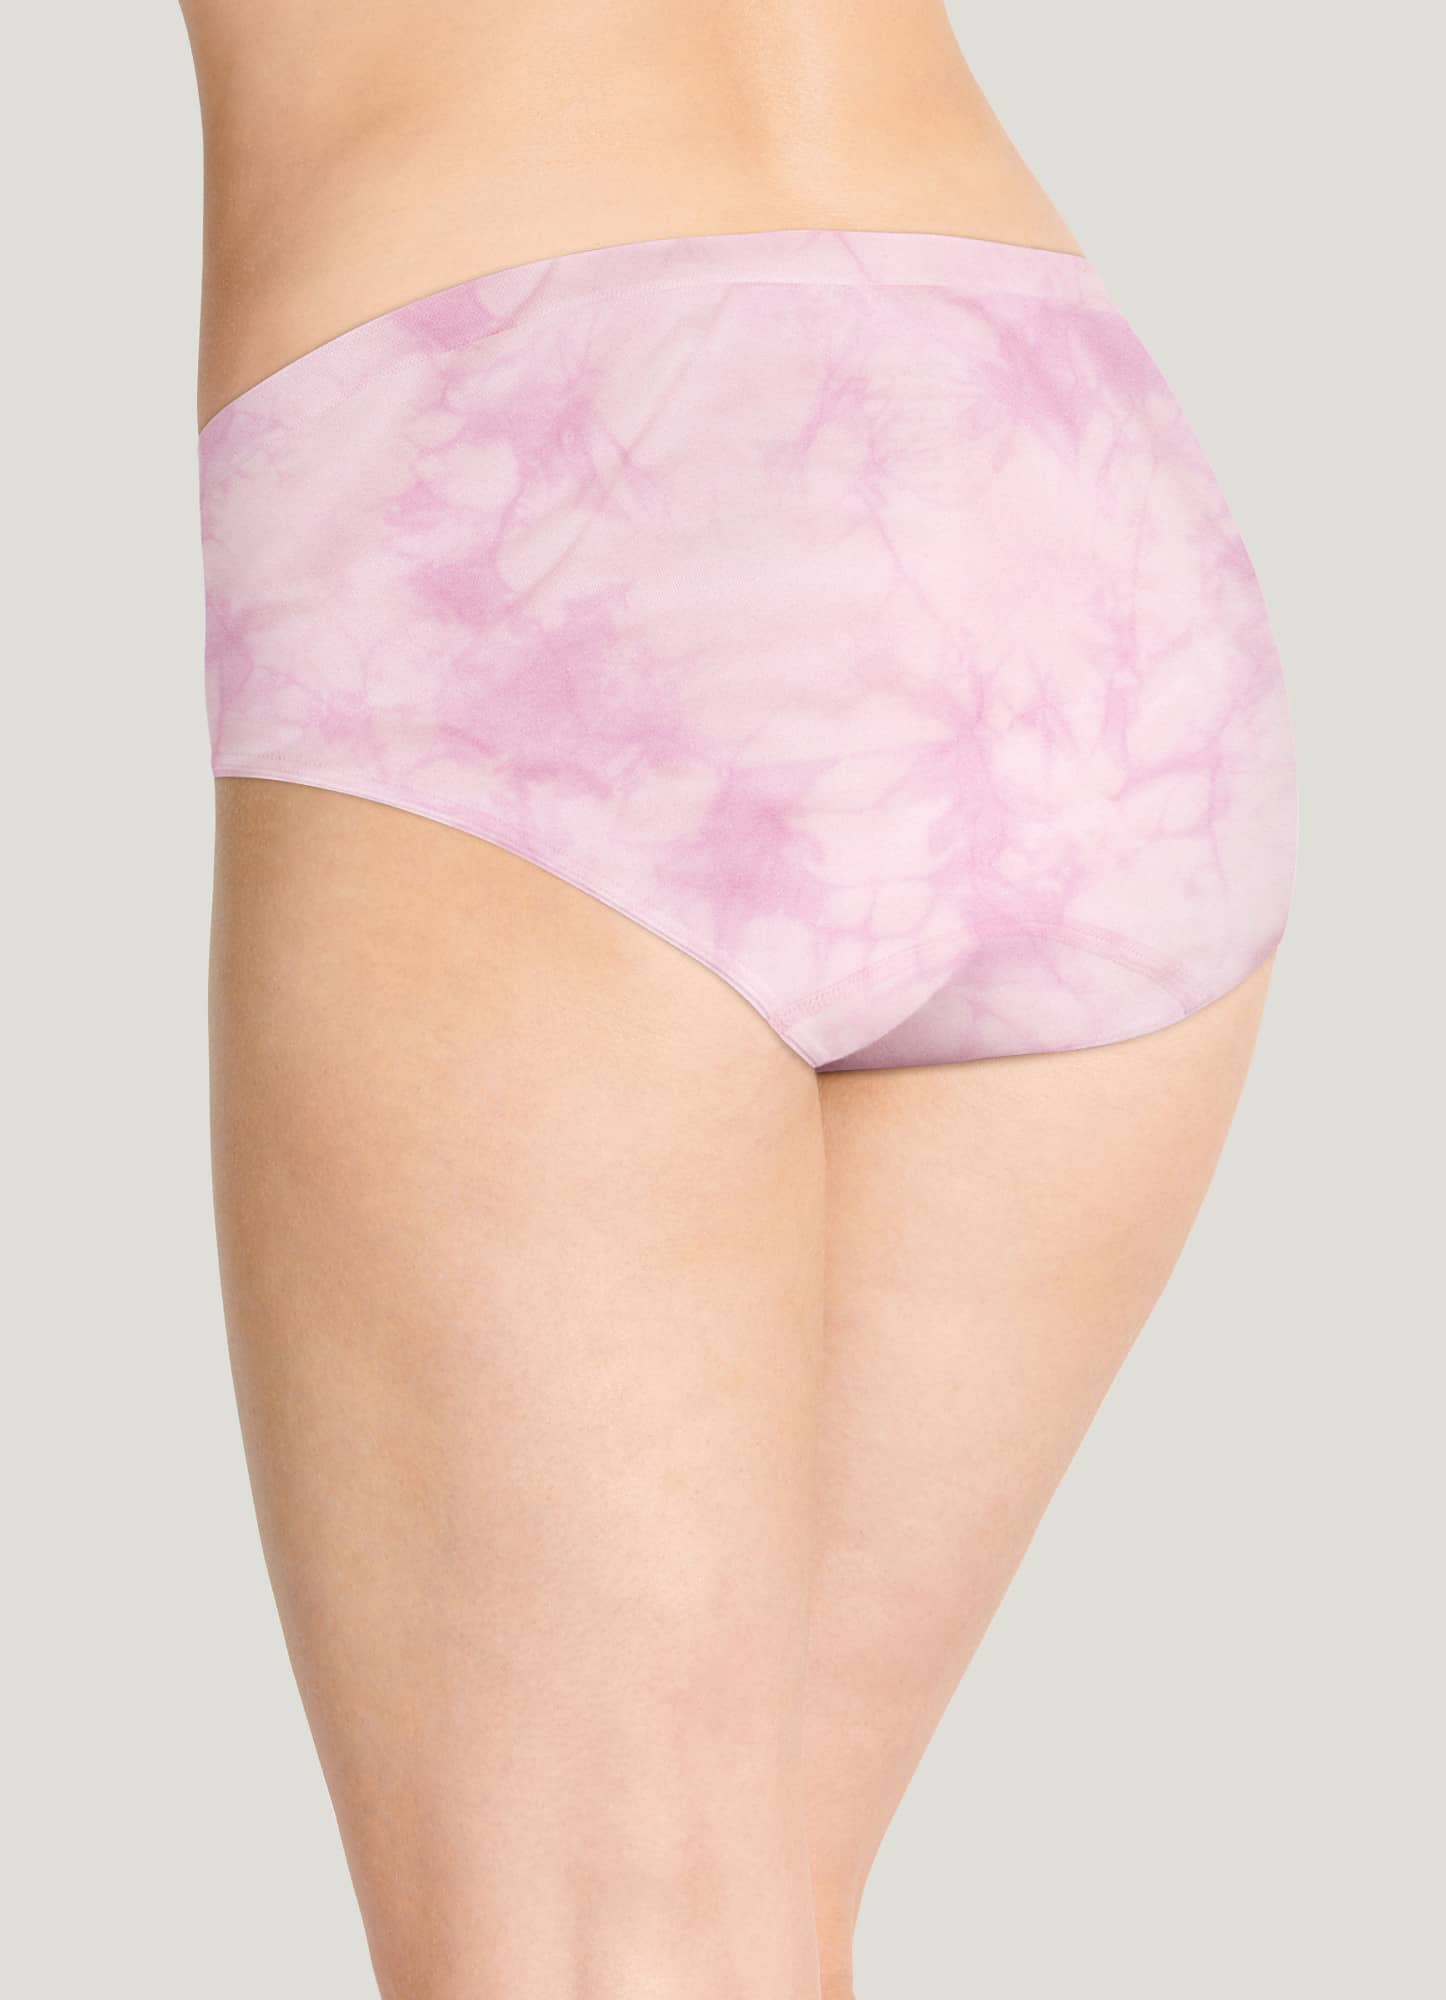 Victoria's Secret unlined 36C BRA SET M panty lot light pink smooth lace 